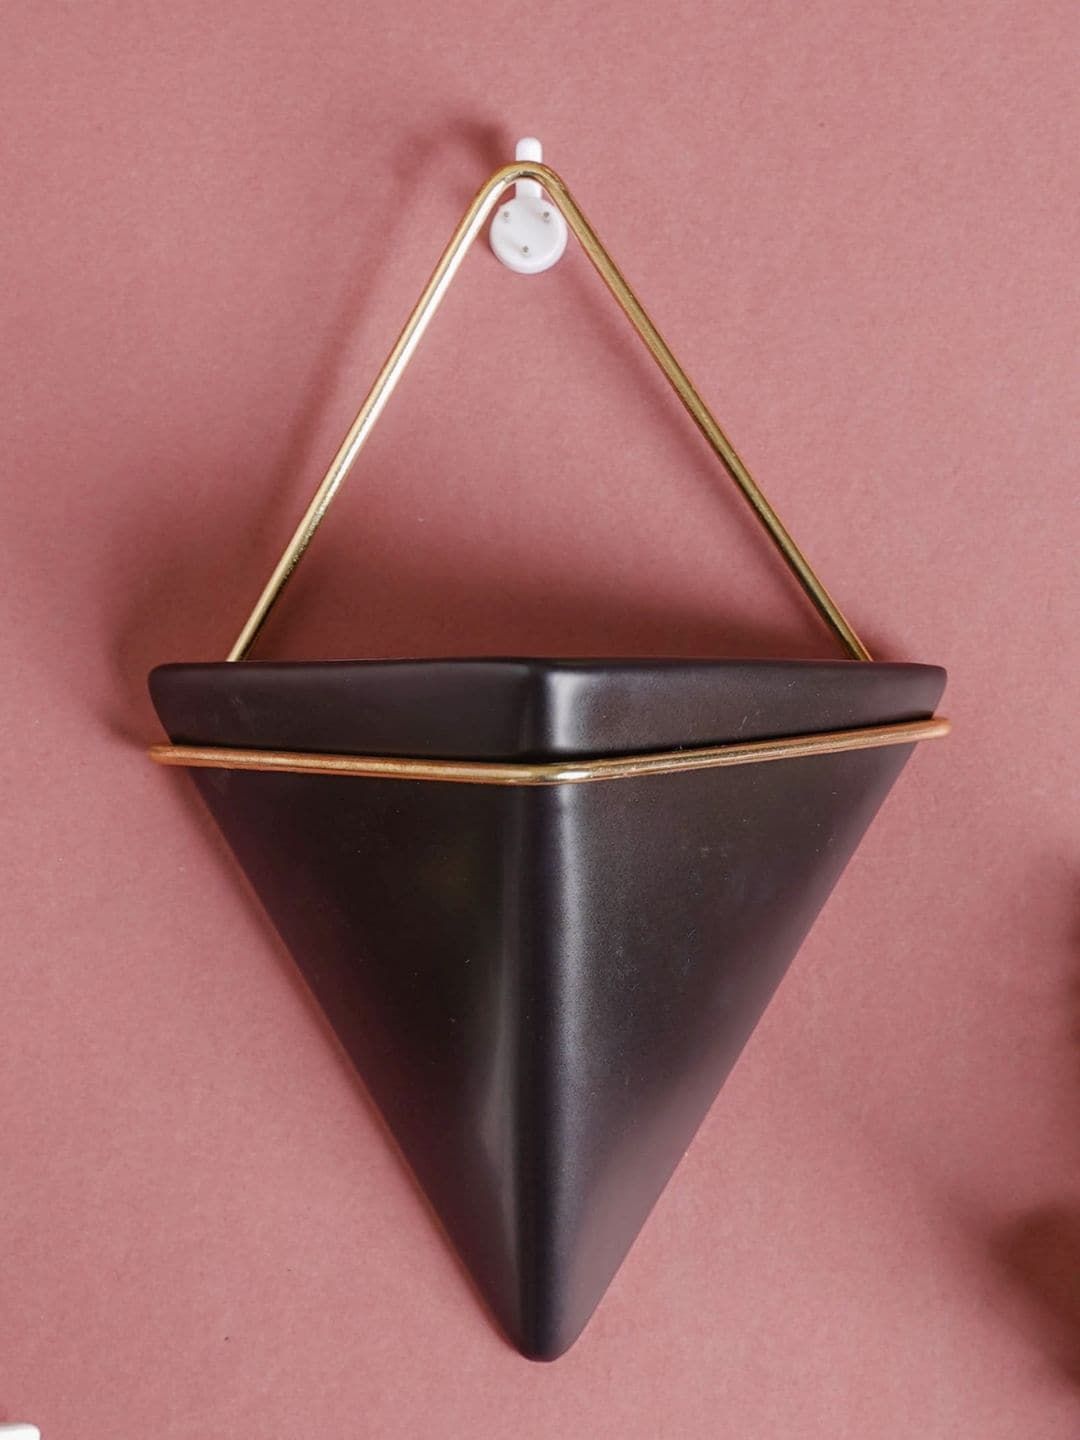 Nestasia Gold-Toned & Black Solid Triangular Ceramic Wall Hanging Price in India